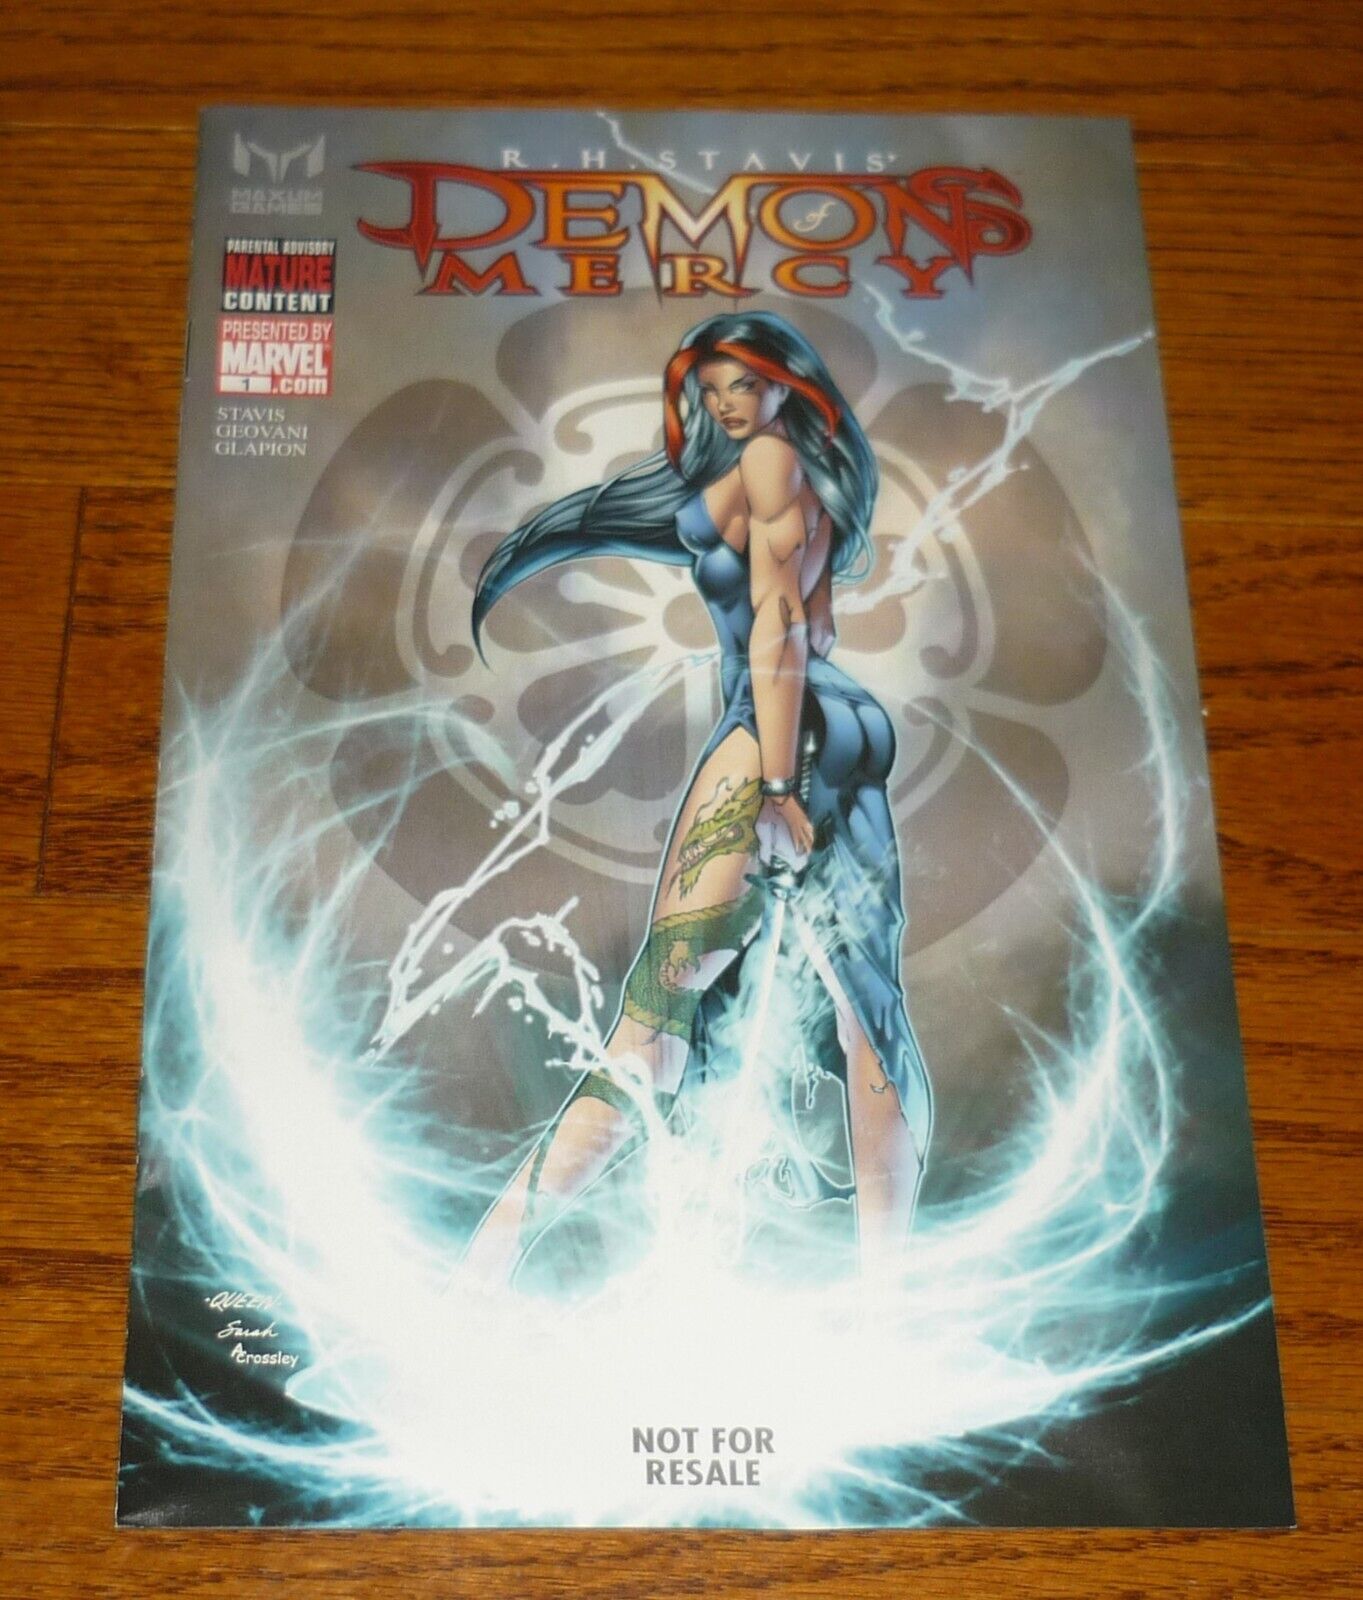 R.H. Stavis\' Demons of Mercy comic book Maxum Games, 2007 Marvel Comics